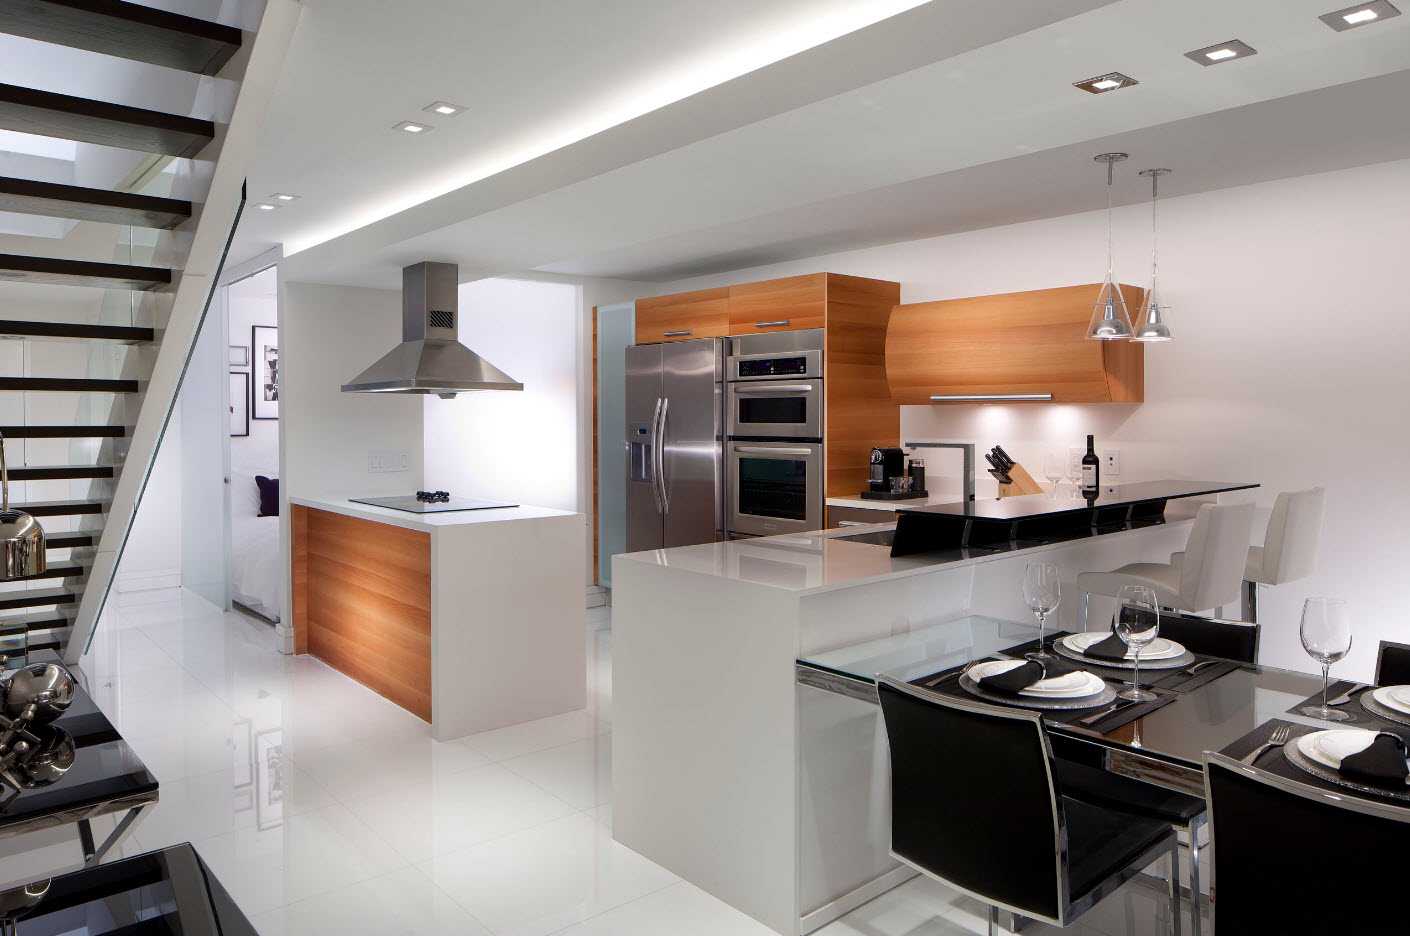 modern black and white kitchen